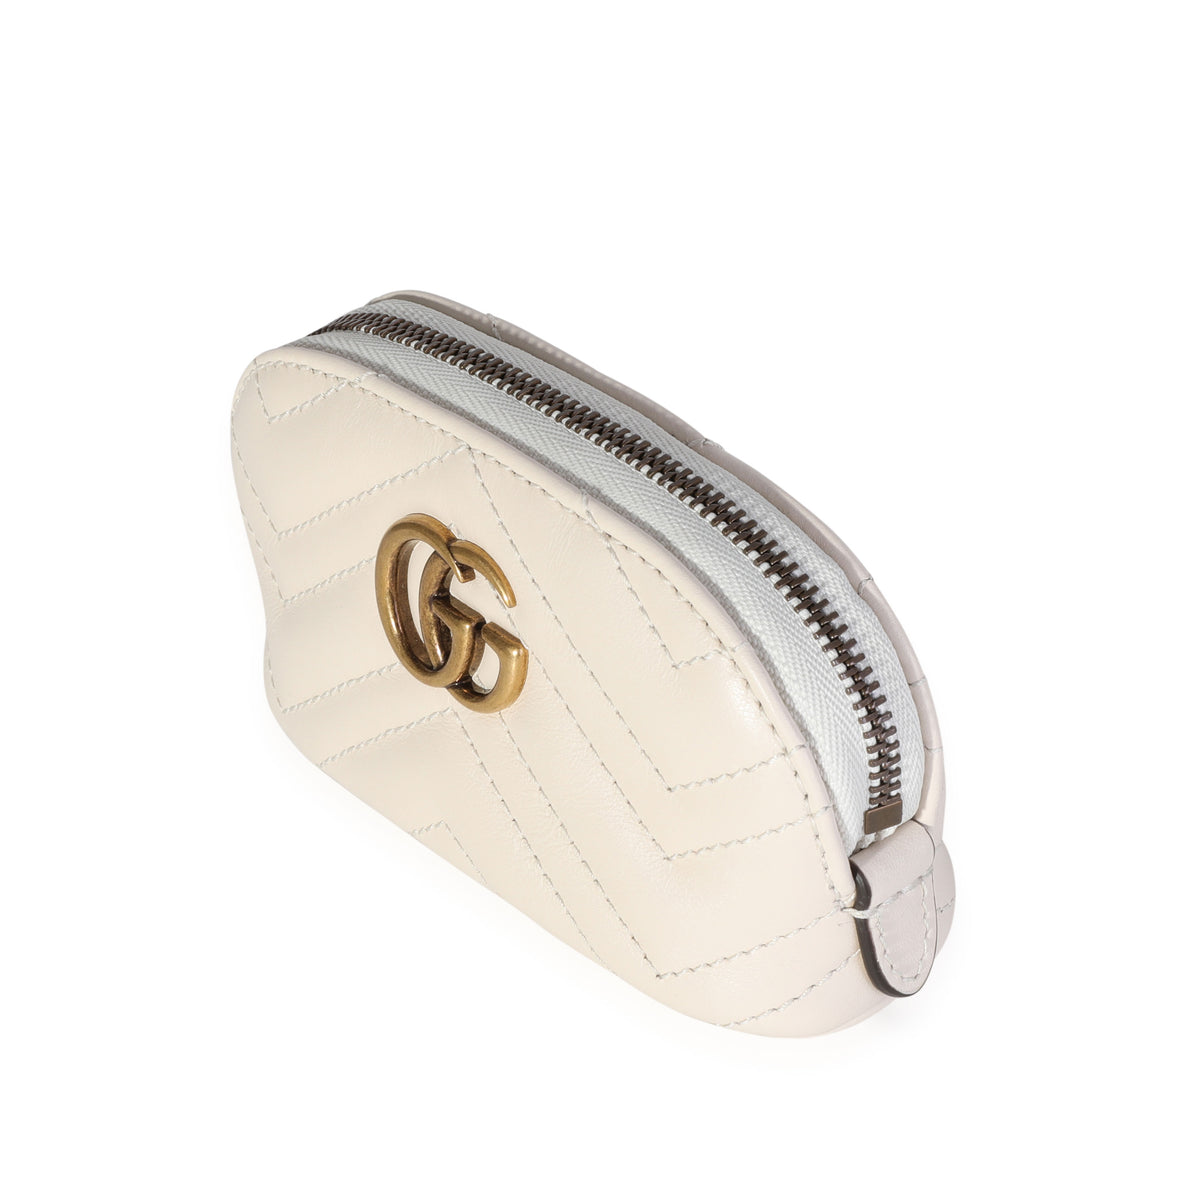 GG Marmont Zip Around Key Case Matelasse Leather